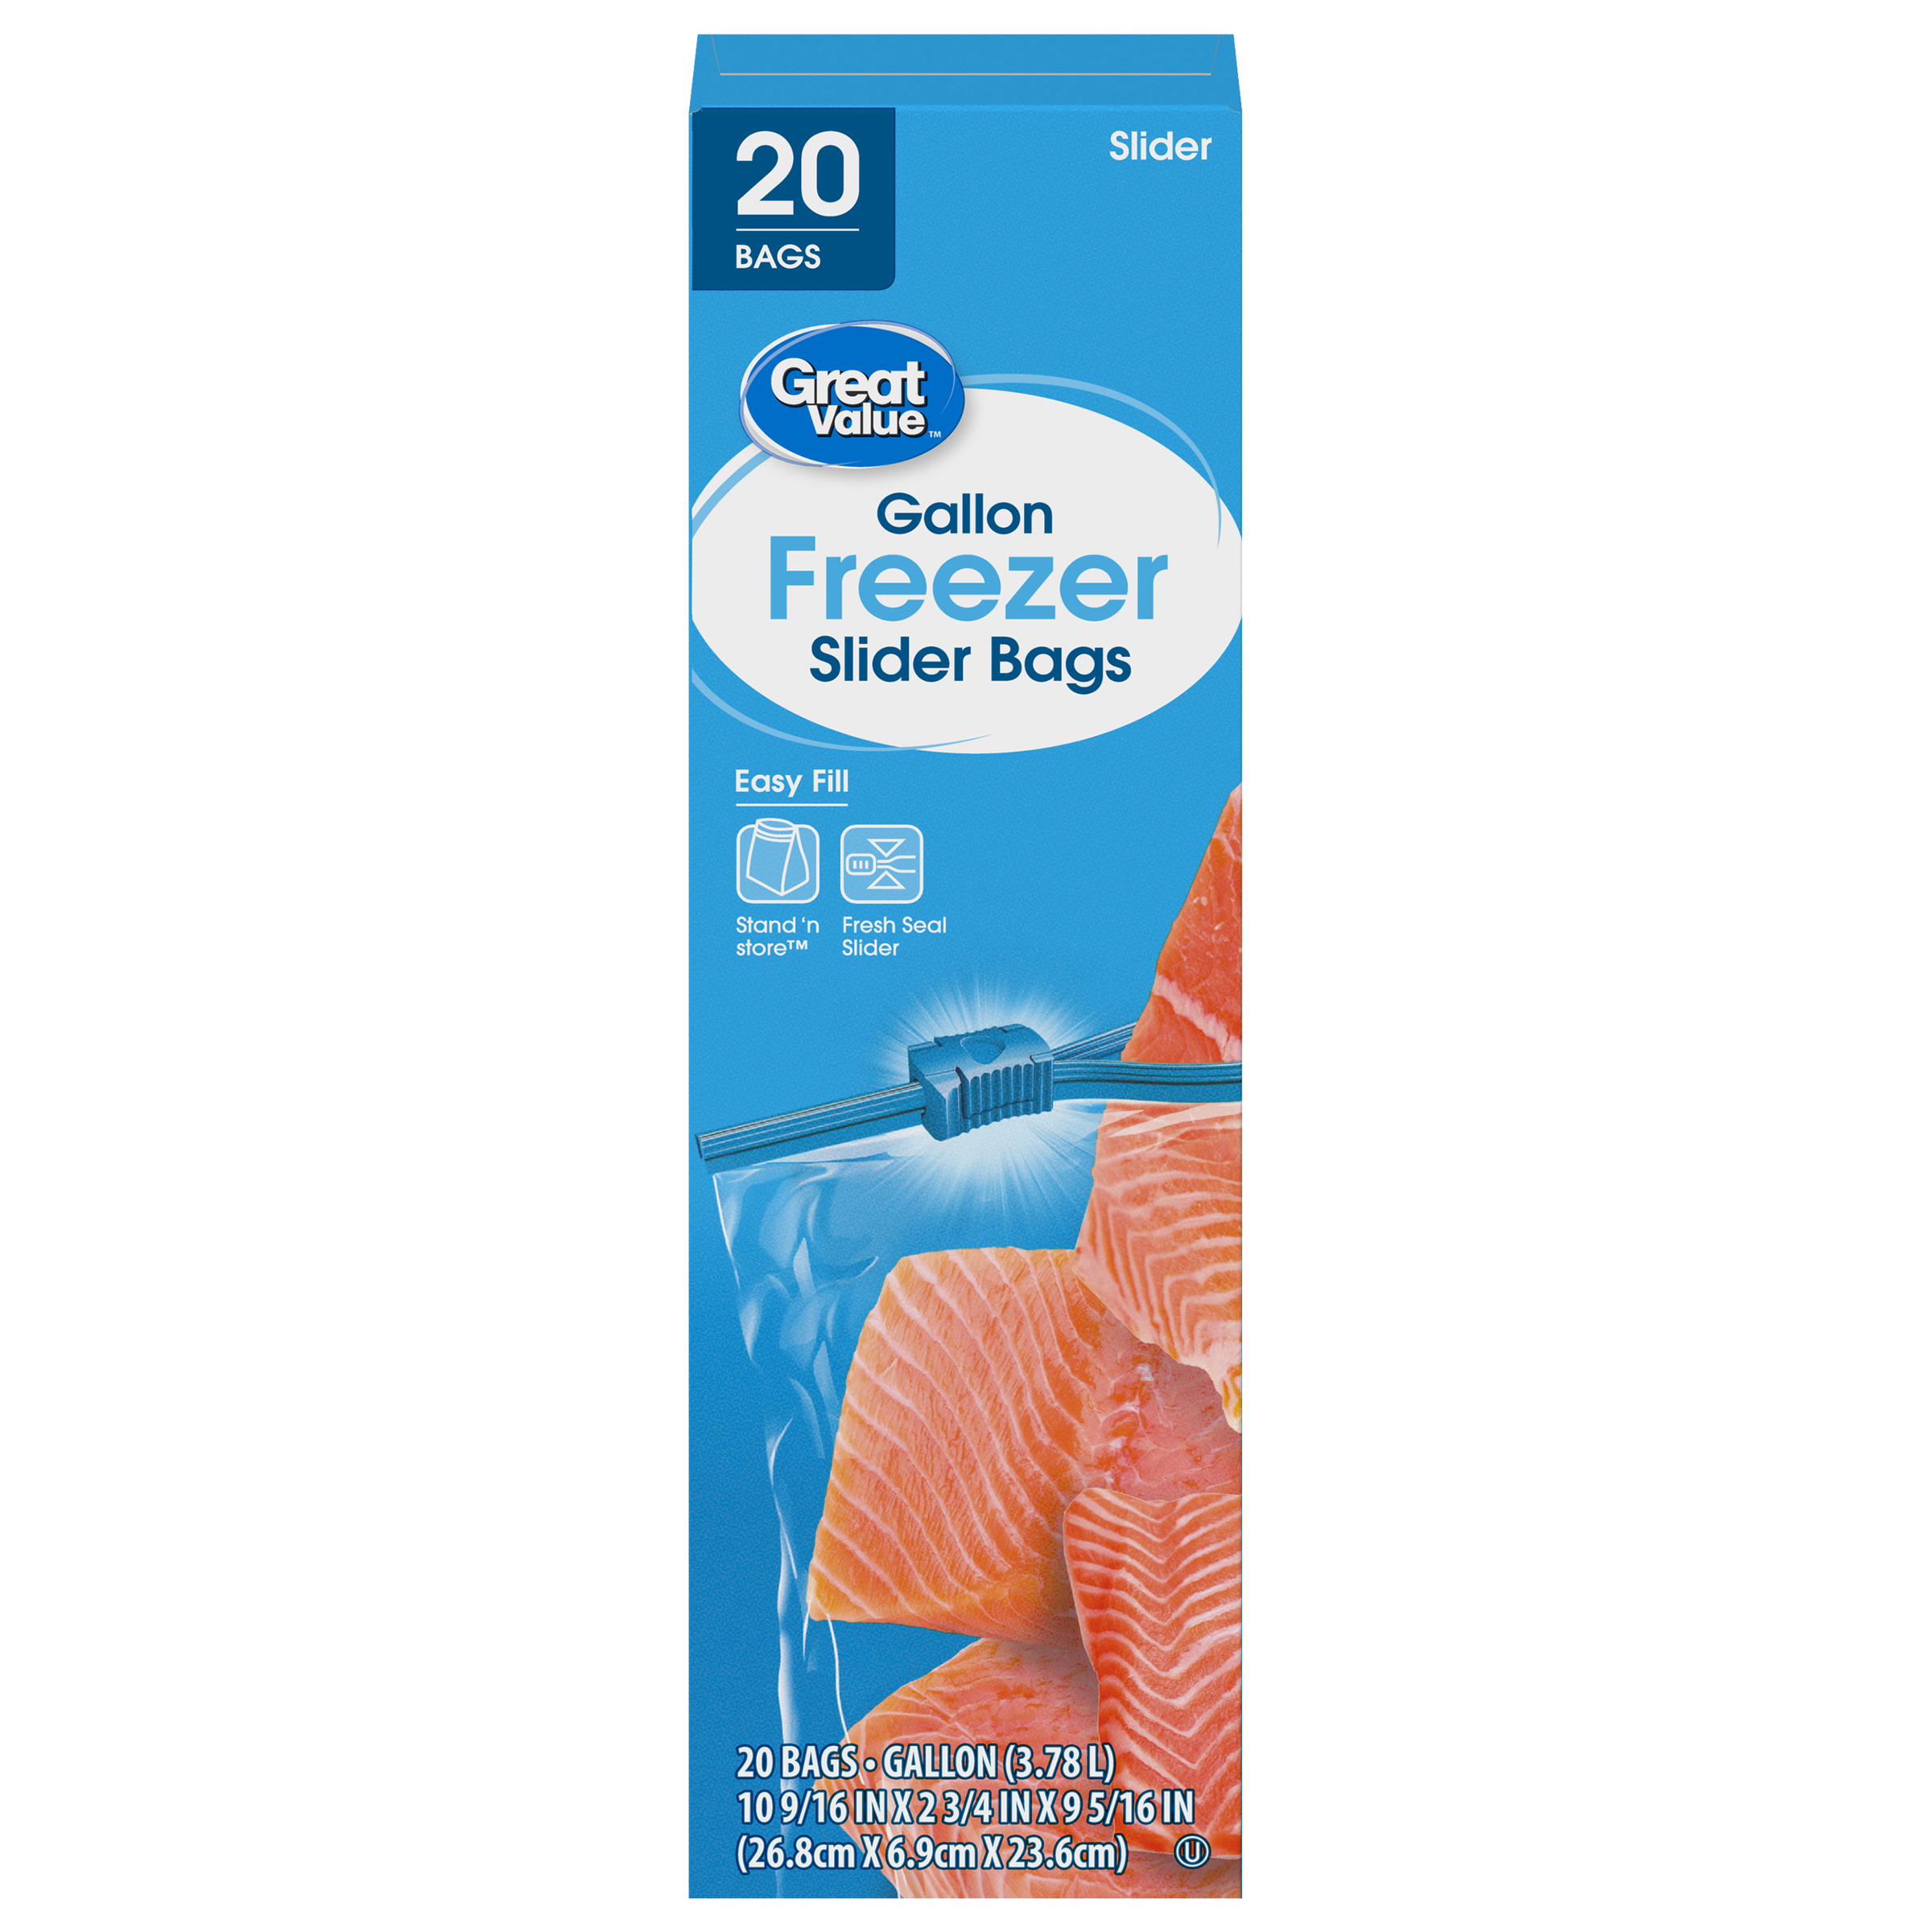 Great Value Freezer Guard Slider Zipper Bags, Gallon Freezer, 20 Count - image 1 of 5